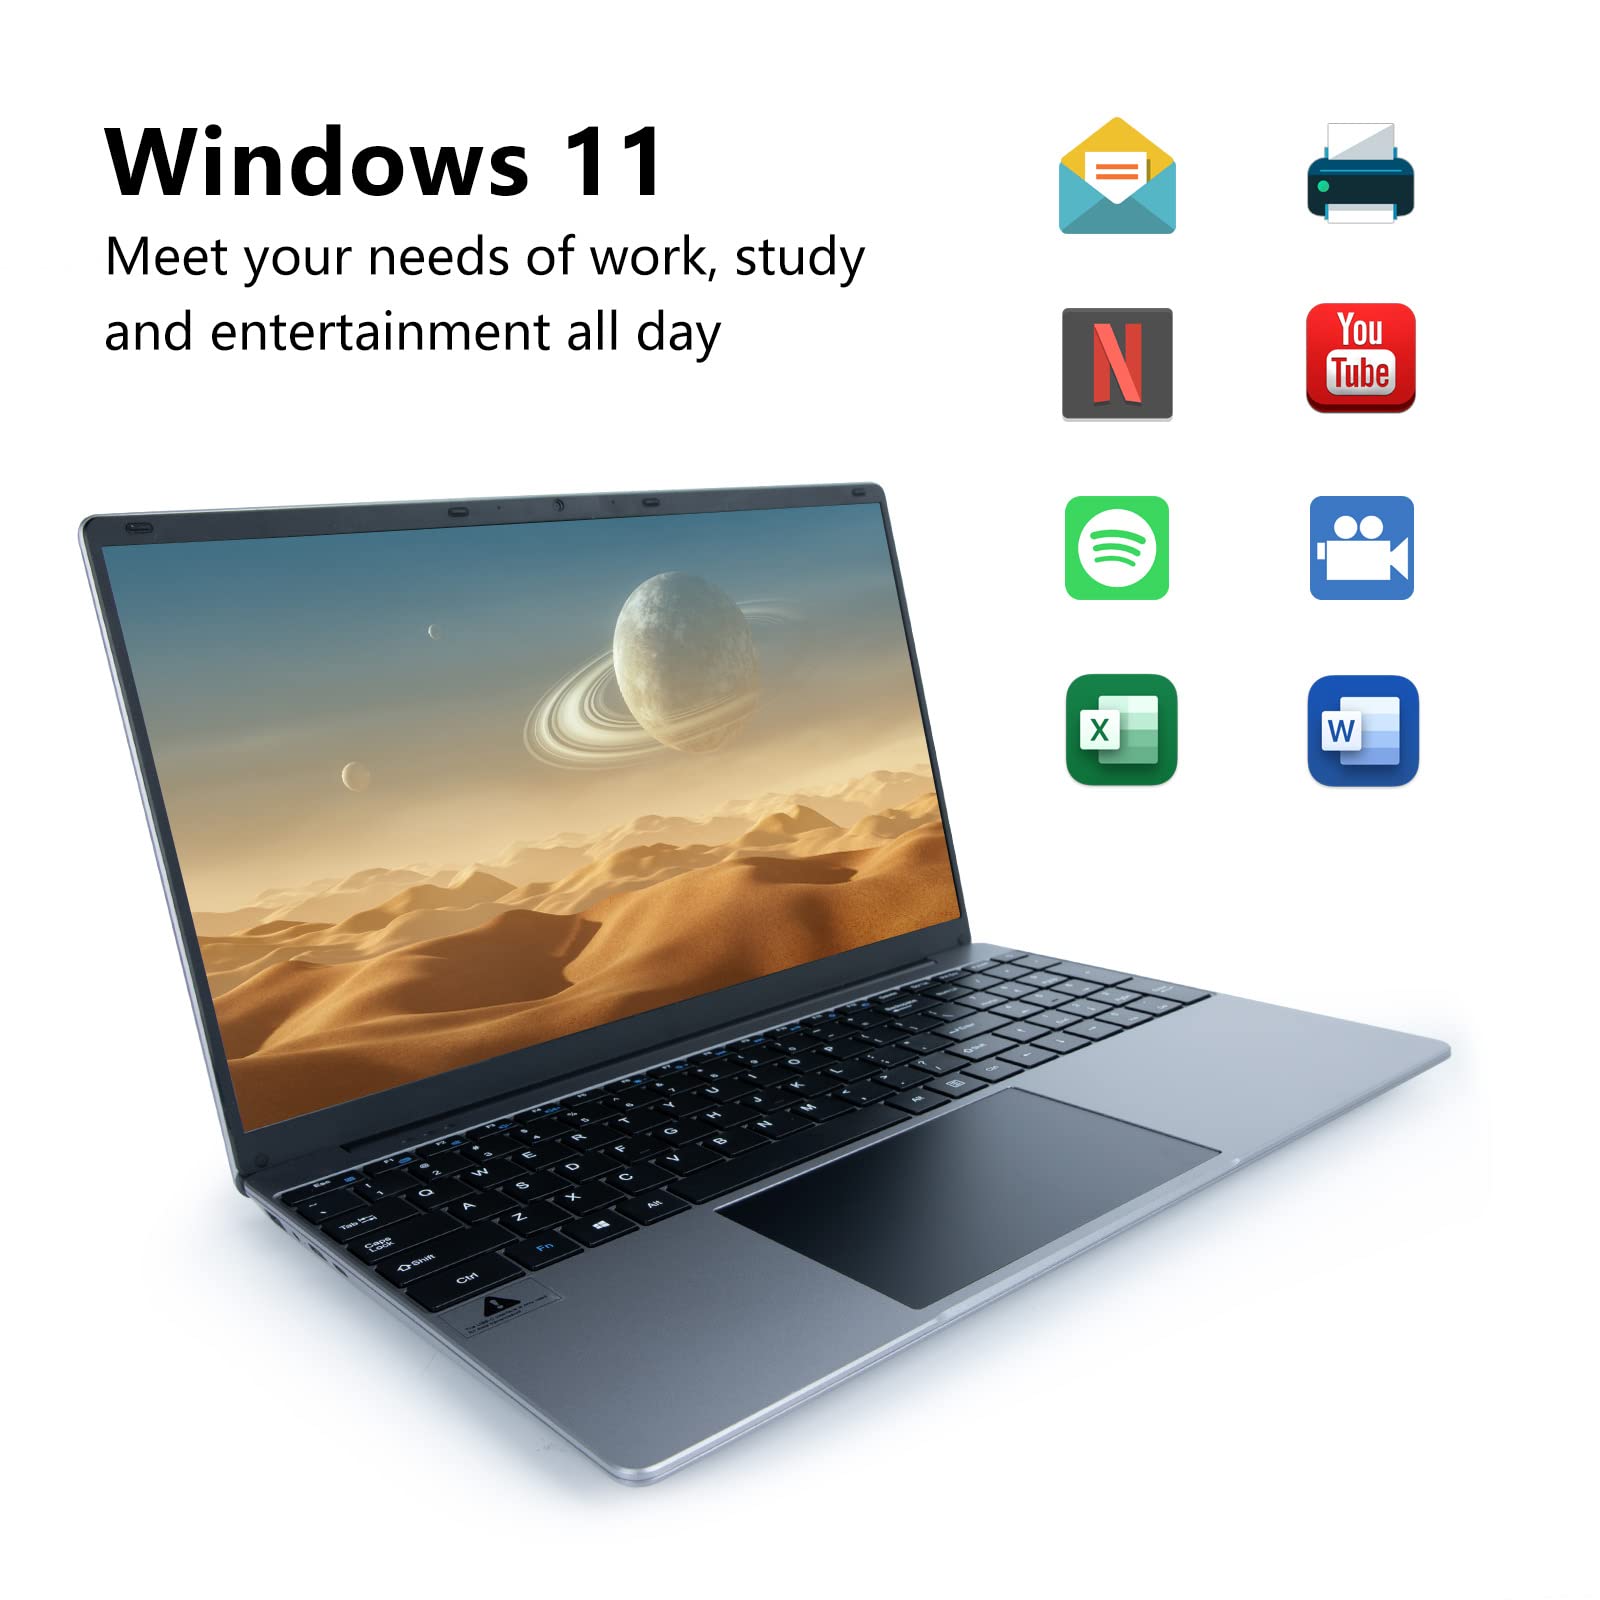 Maypug Laptop Computer -1080P IPS Full HD Laptop,12GB DDR4 512GB SSD Quad-Core Intel Celeron Processors, Pre-Installed Windows 11, USB 3.0, 15.6''Screen, Bluetooth 4.2, 2.4G/5G WiFi, Mini-HDMI